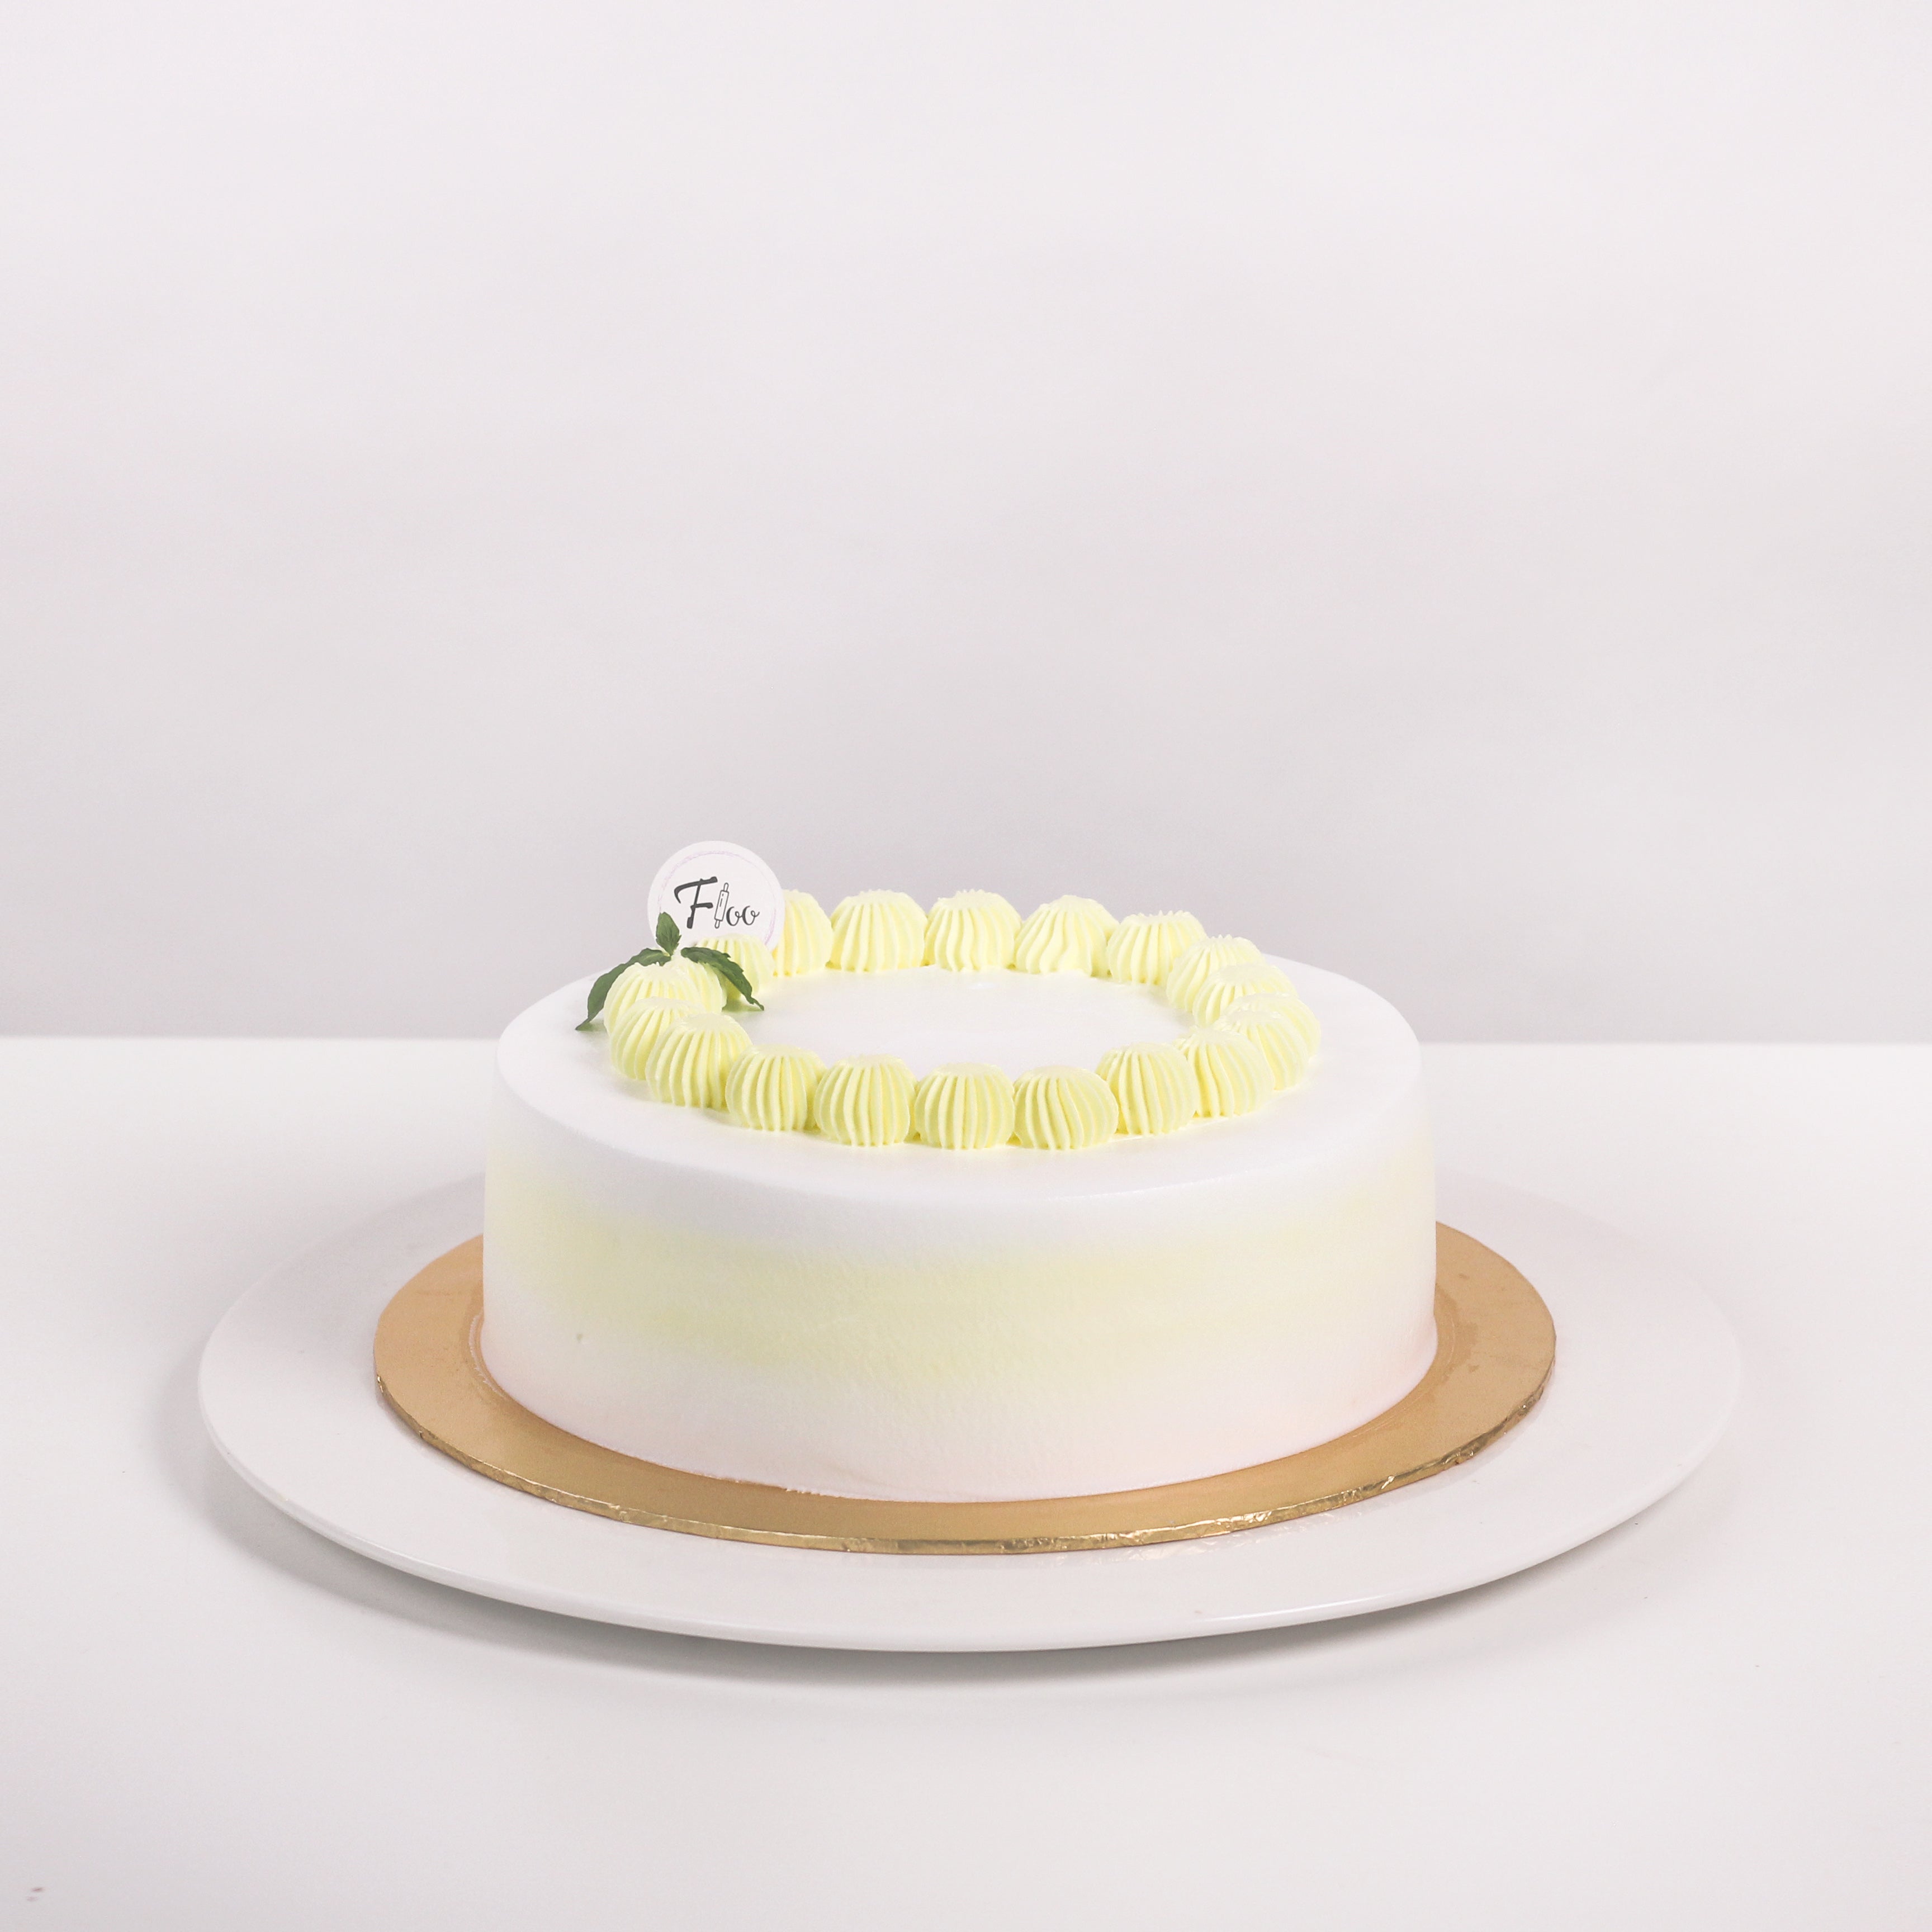 yummy #fourseasons #durian #duriancake happy #birthday ♥